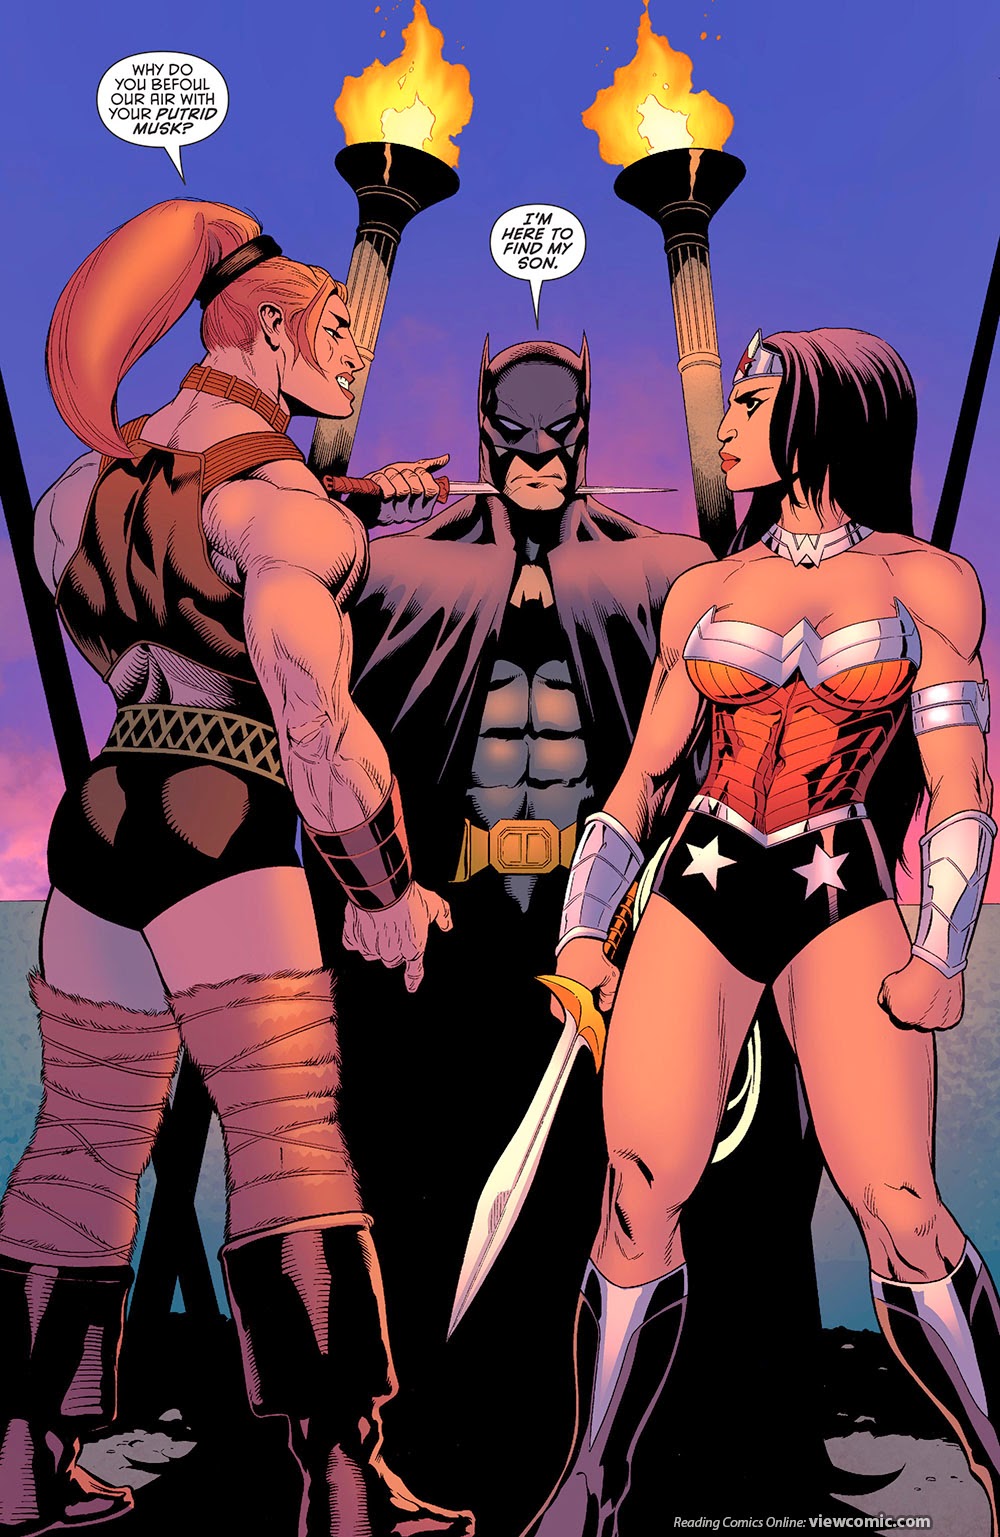 030 Batman And Wonder Woman 2014 | Read 030 Batman And Wonder Woman 2014  comic online in high quality. Read Full Comic online for free - Read comics  online in high quality .|